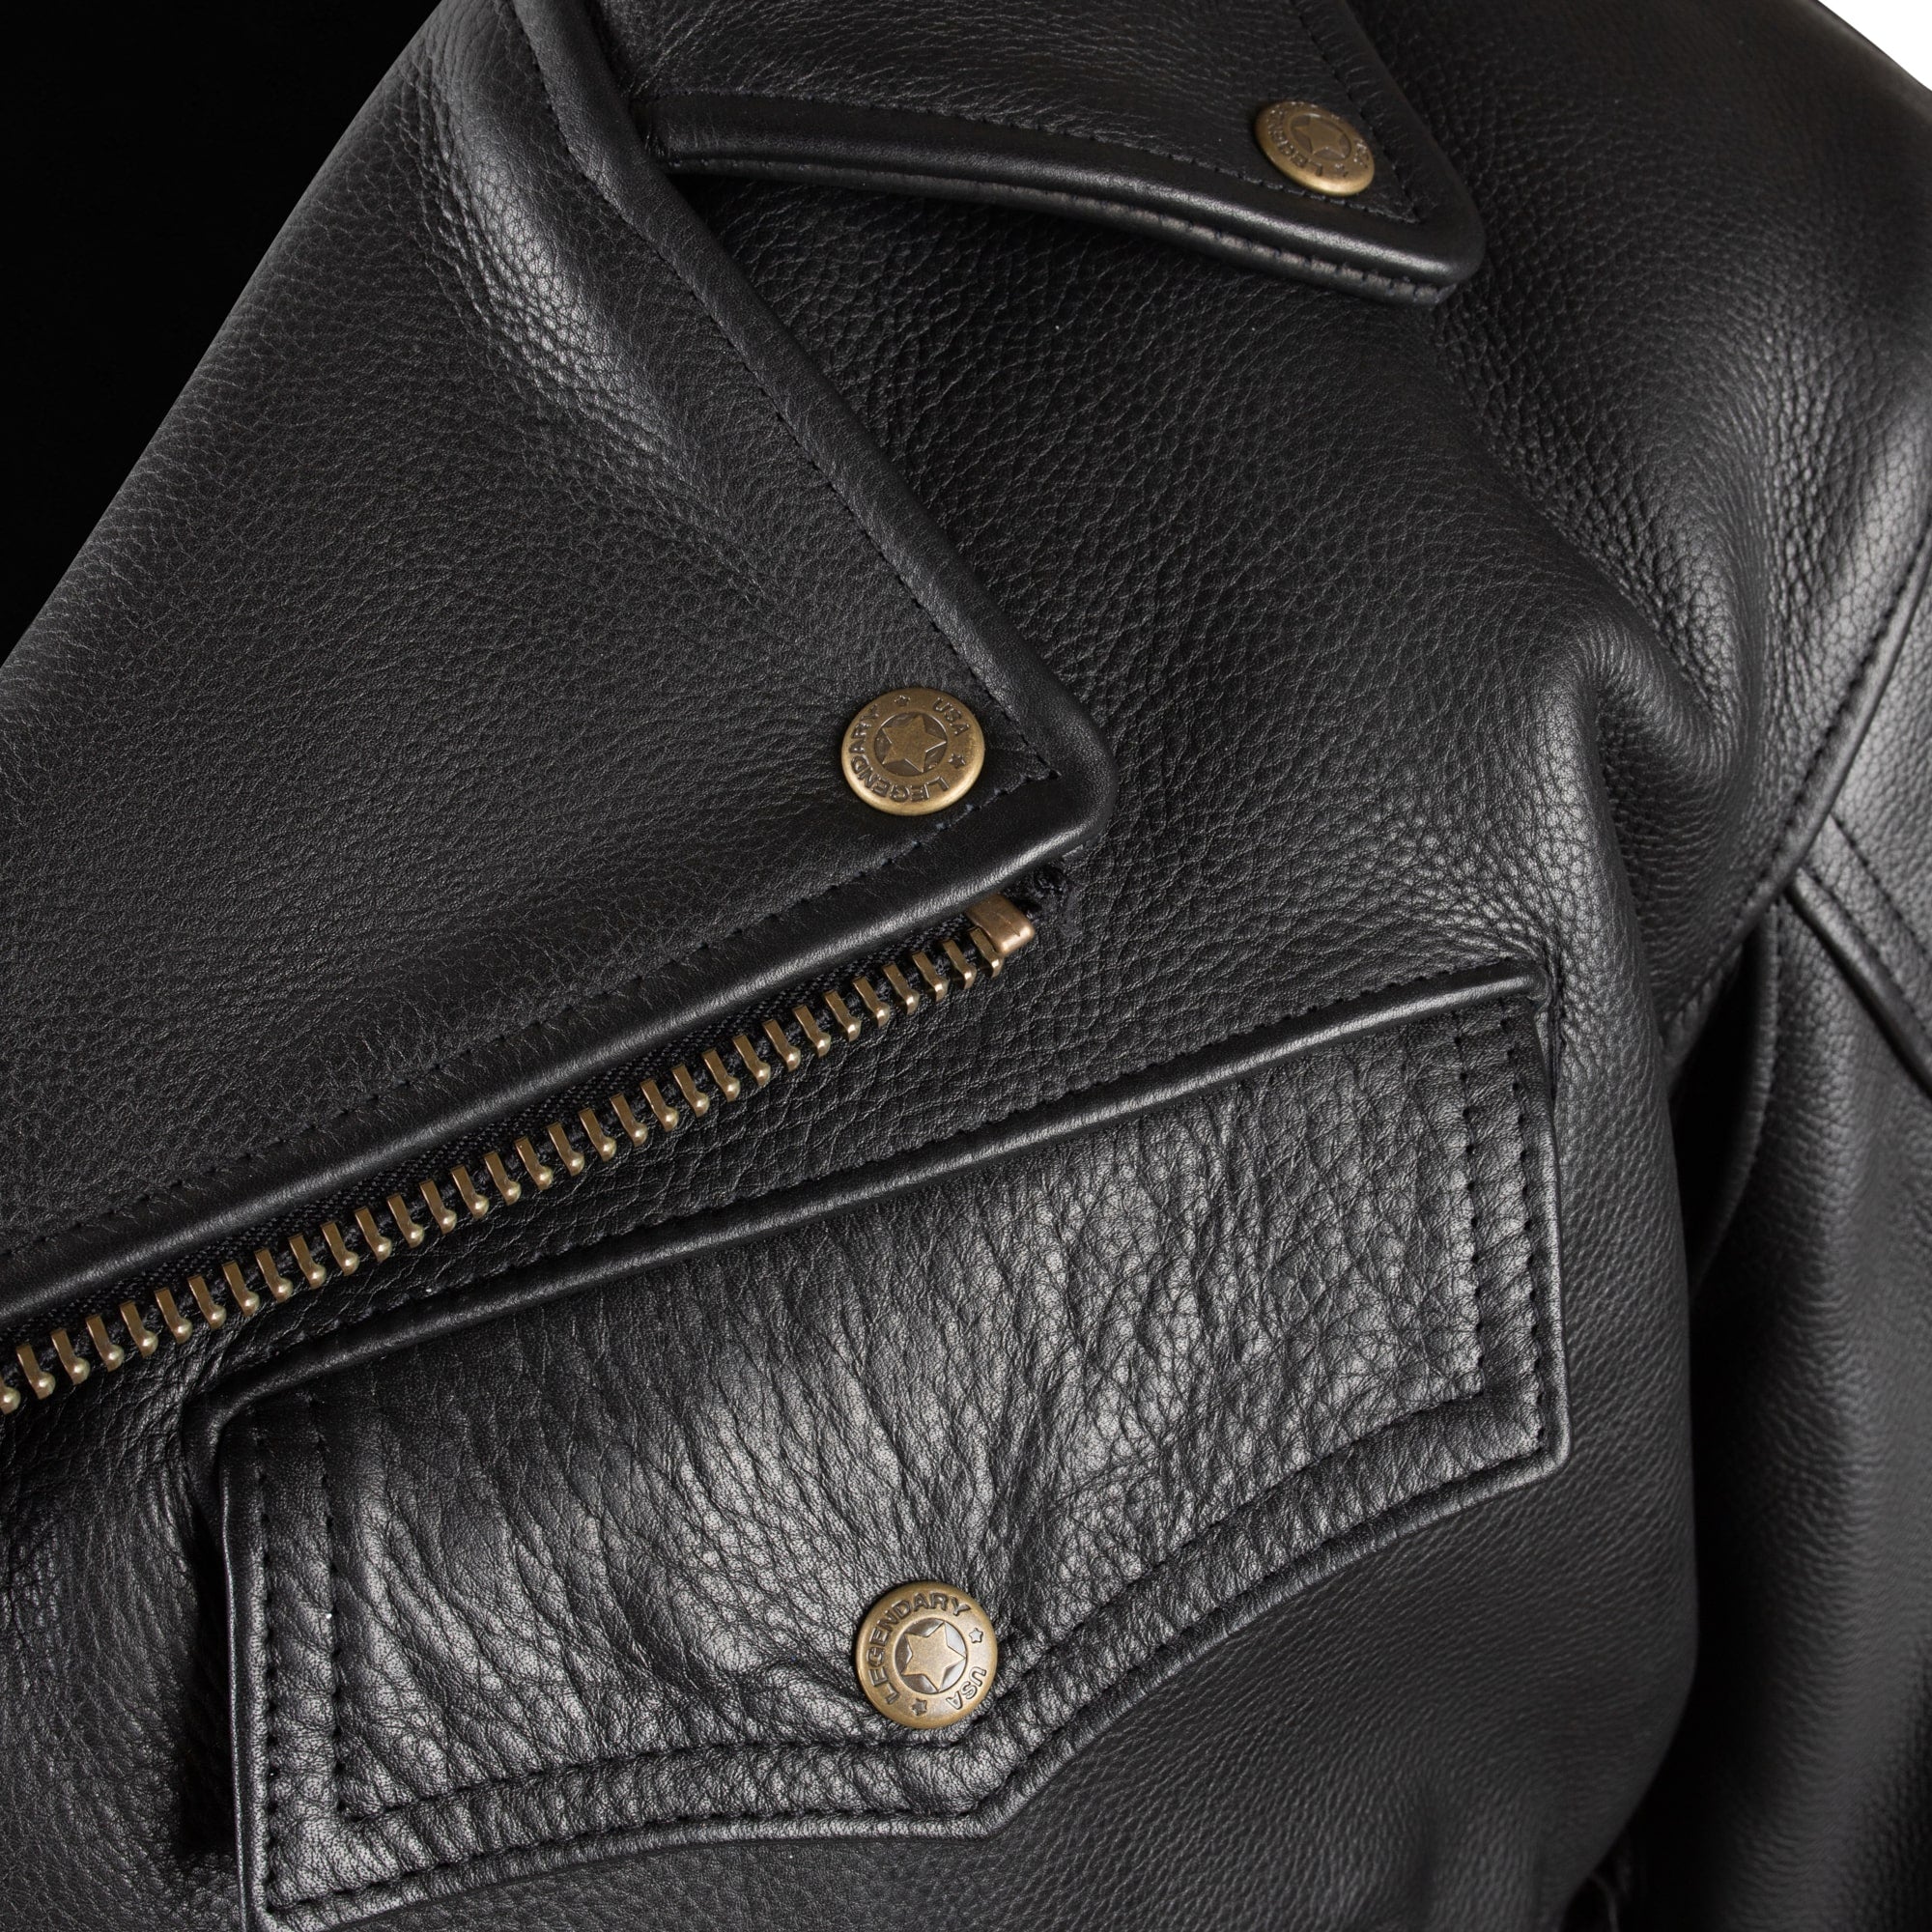 How To Wear A Leather Biker Jacket for Men? | Leather Jacket Shop